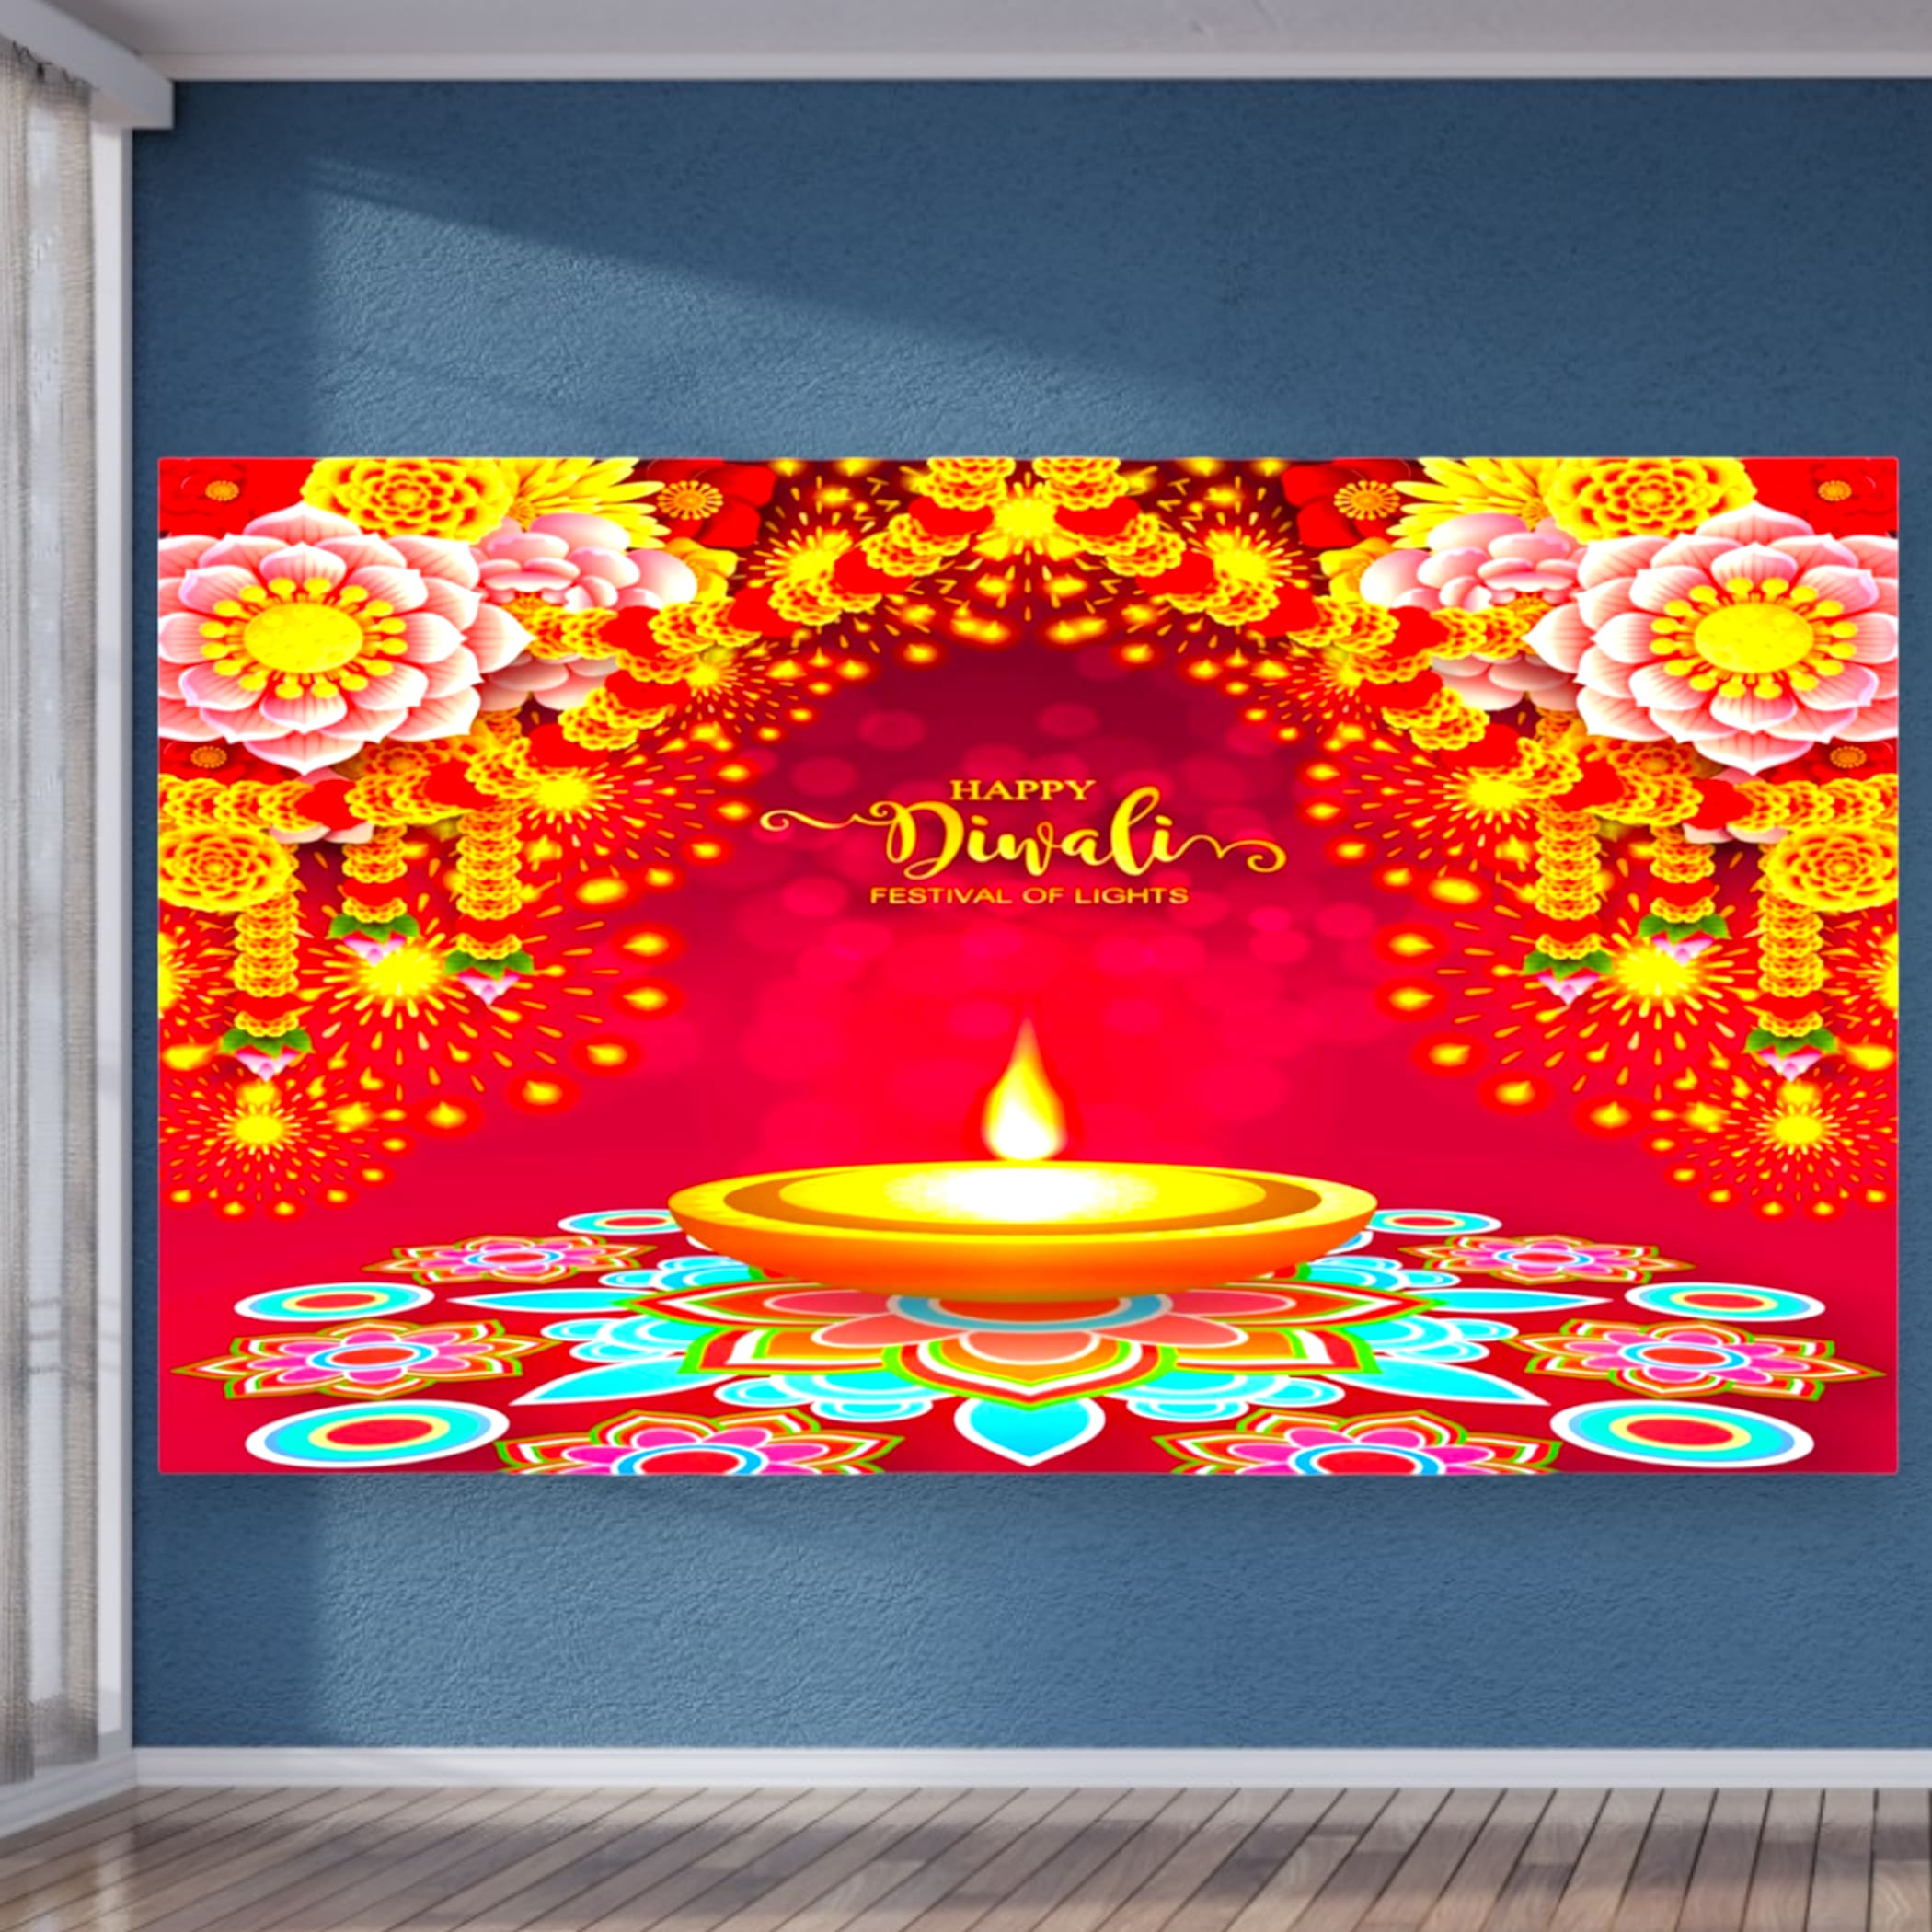 Happy Diwali Wall Decor Banner Decoration Cloth Backdrop